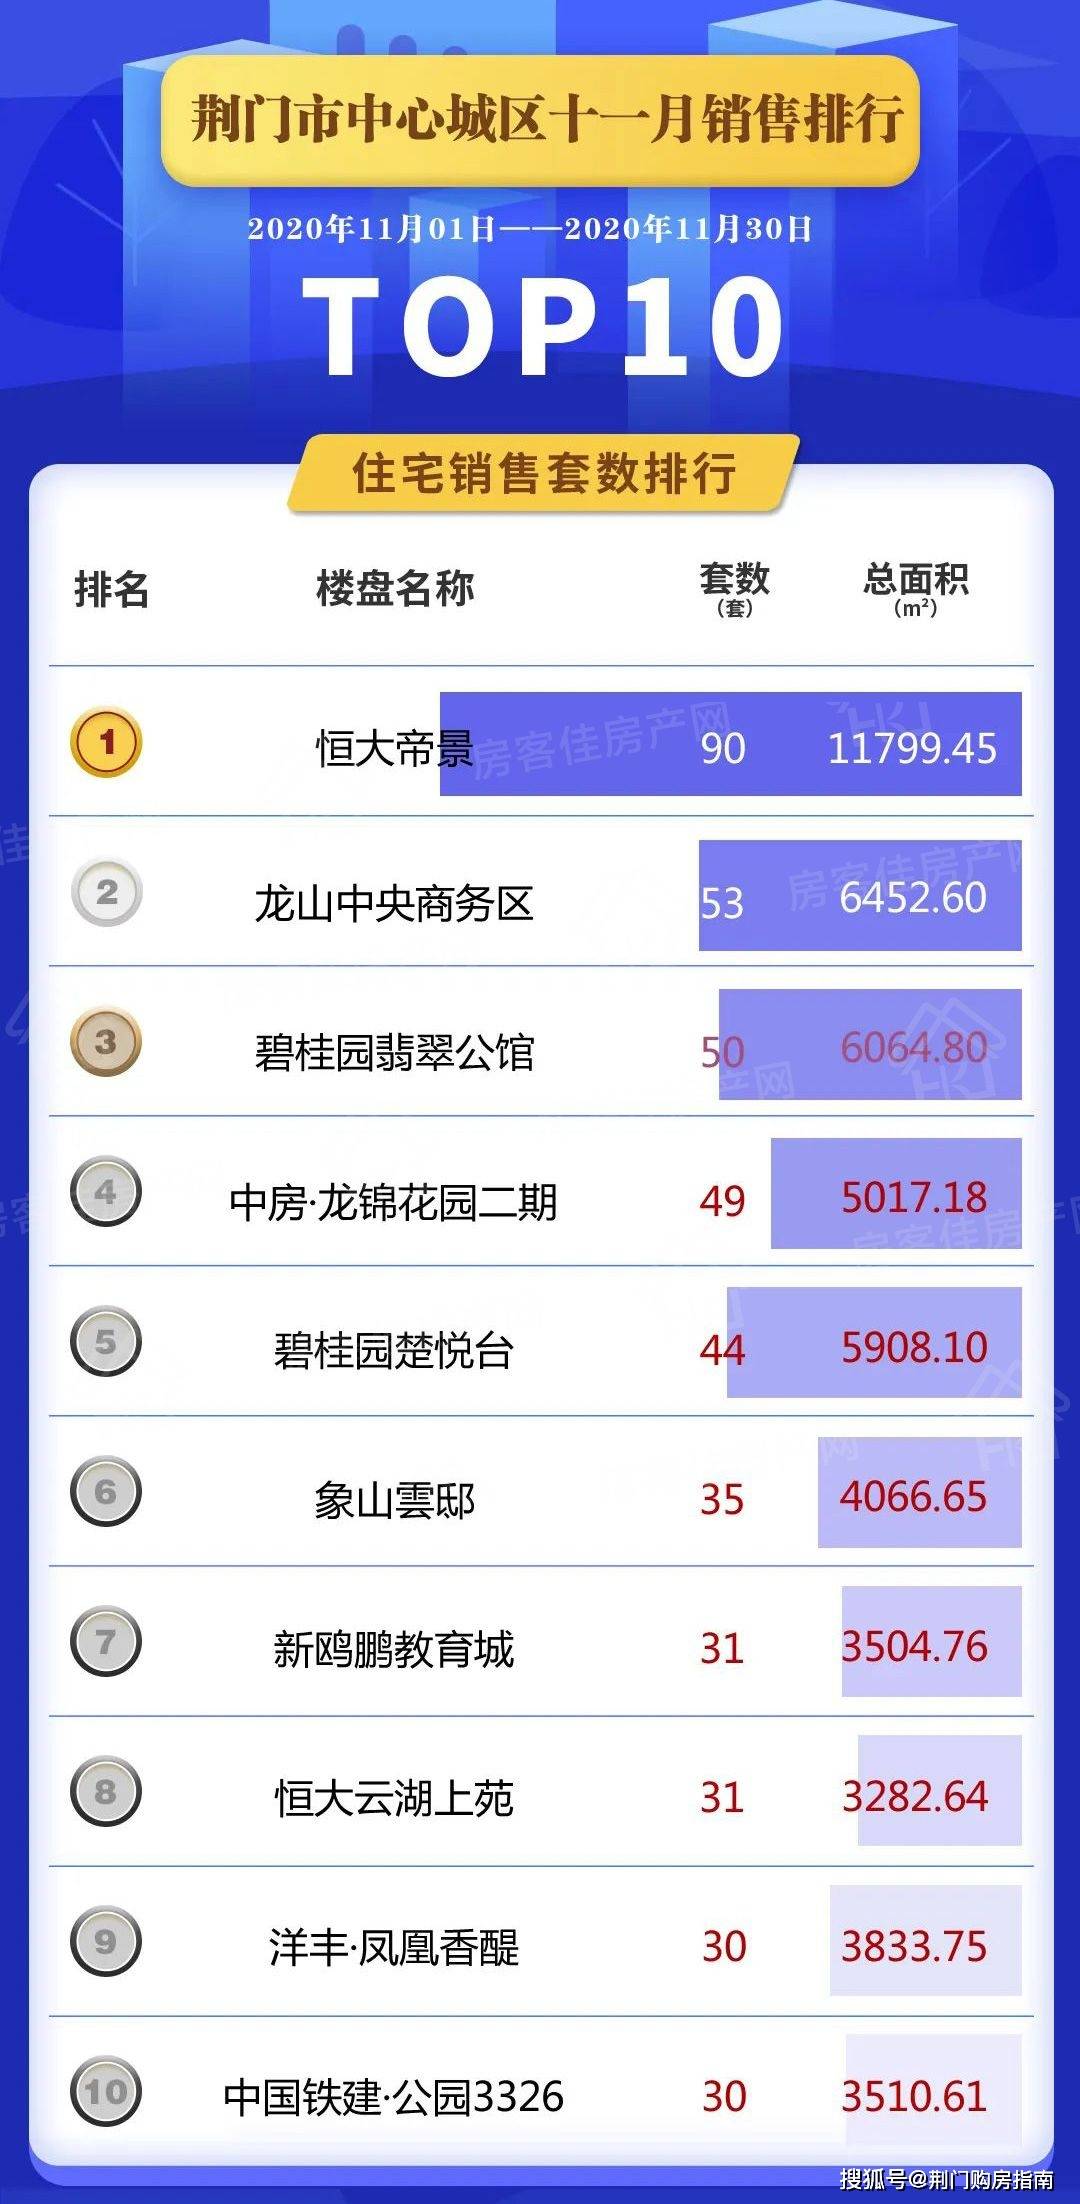 bd体育官网2020年11月荆门中心城区楼市销售排行榜(图1)